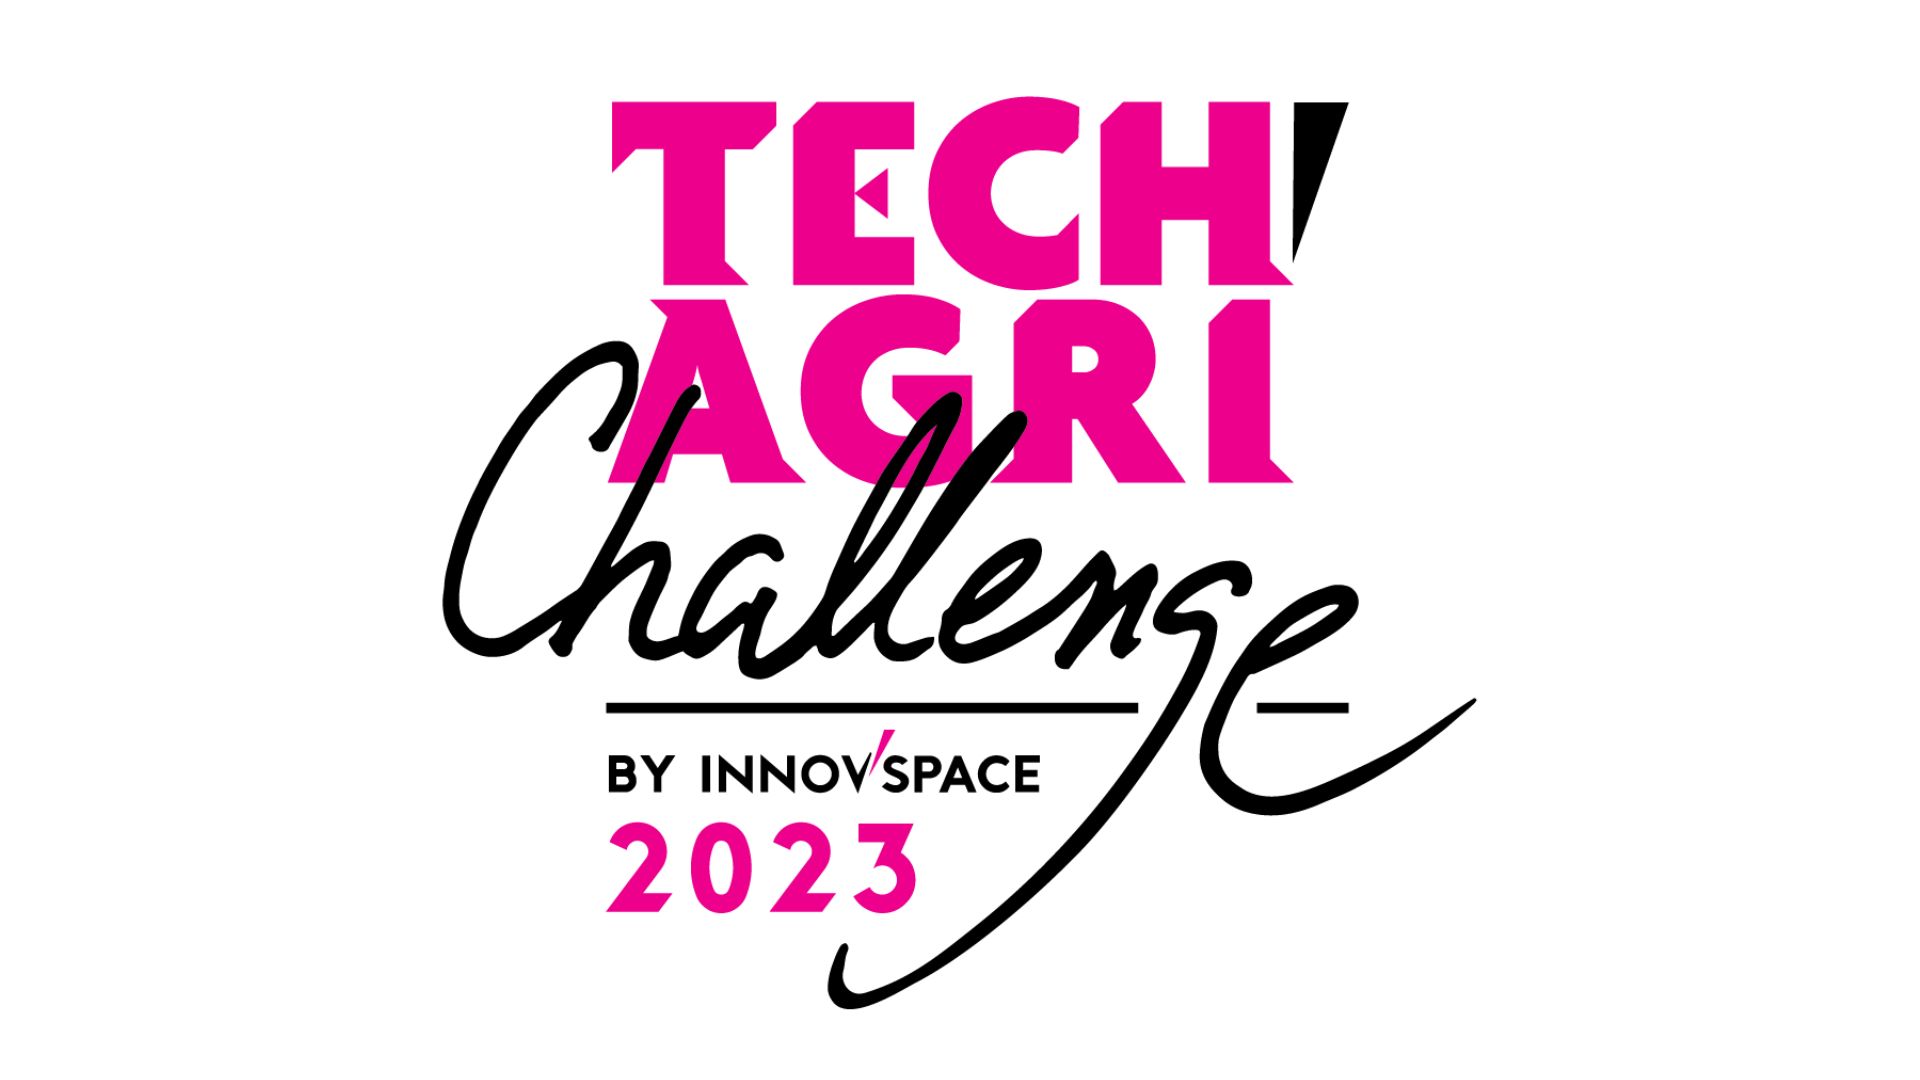 Tech’Agri Challenge 2023